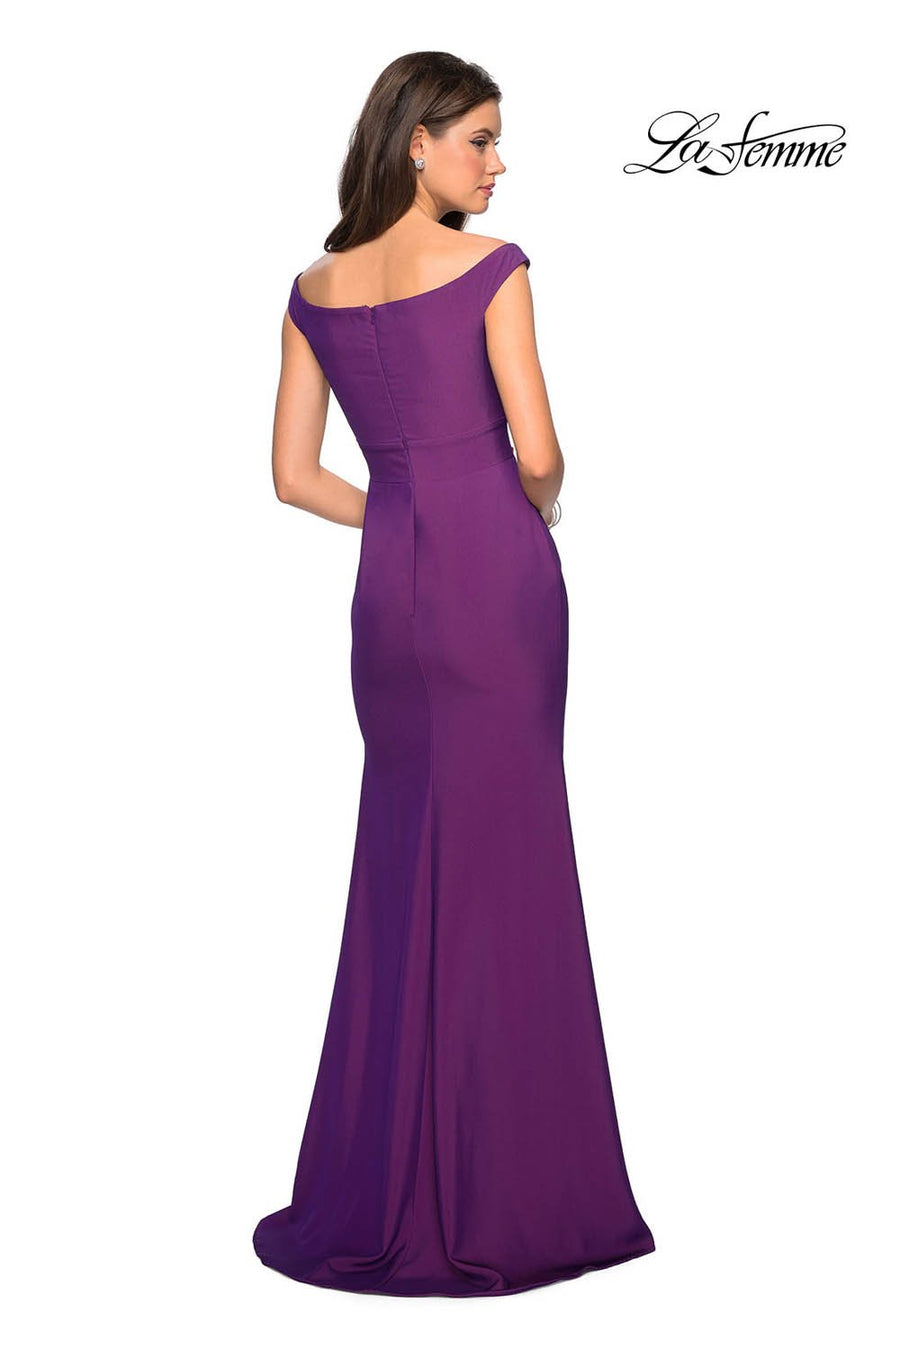 La Femme 27587 prom dress images.  La Femme 27587 is available in these colors: Burgundy, Gunmetal, Navy, Violet.